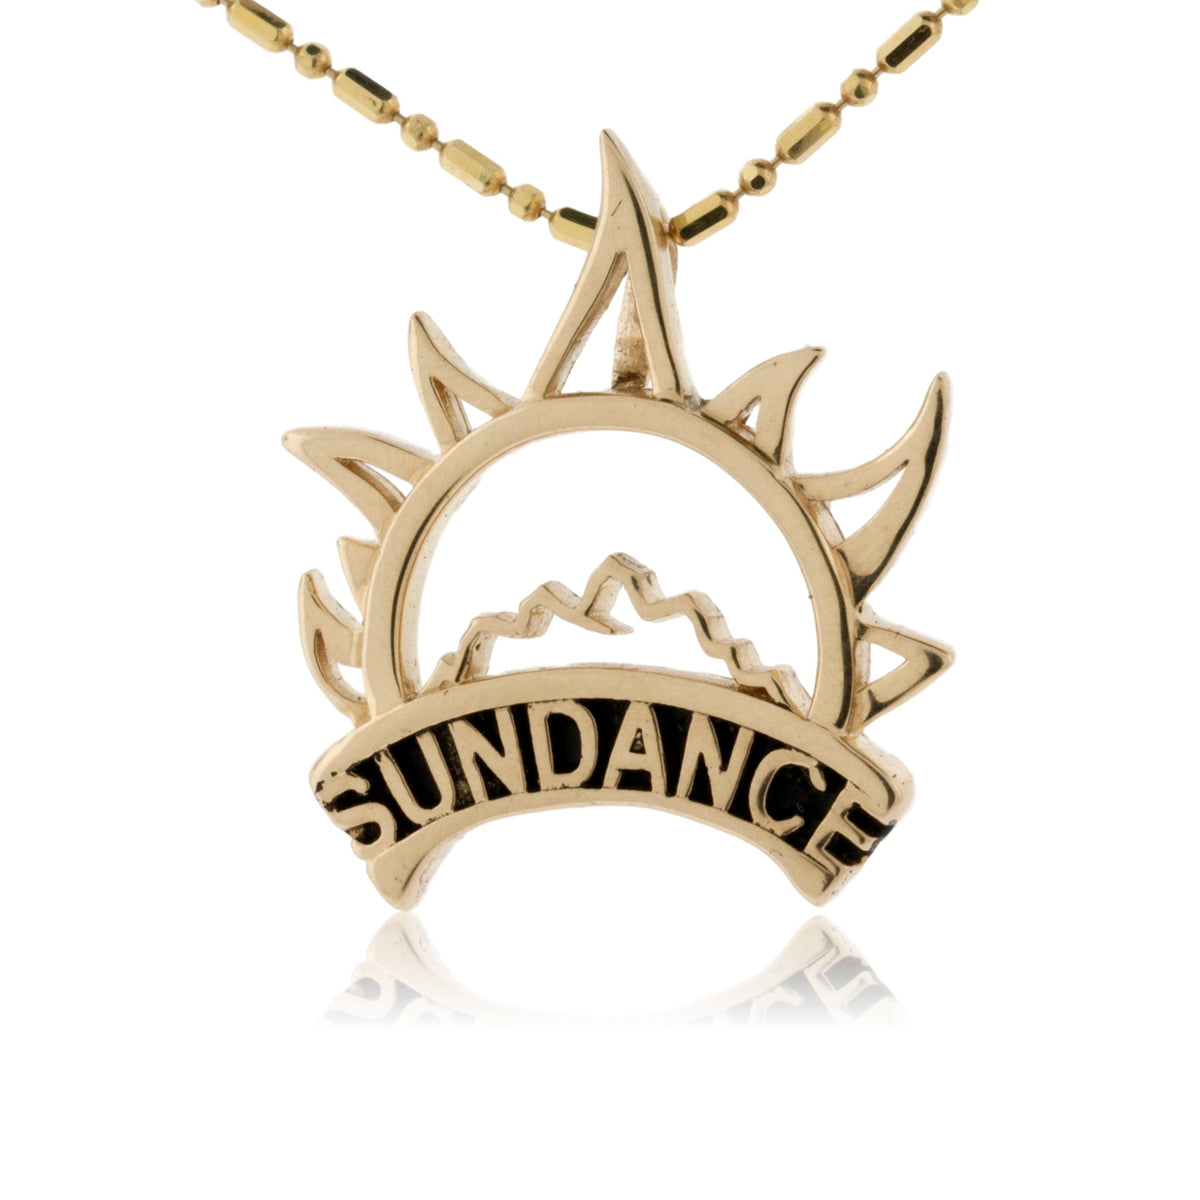 Sun "Sundance" Charm / Pendant - Park City Jewelers